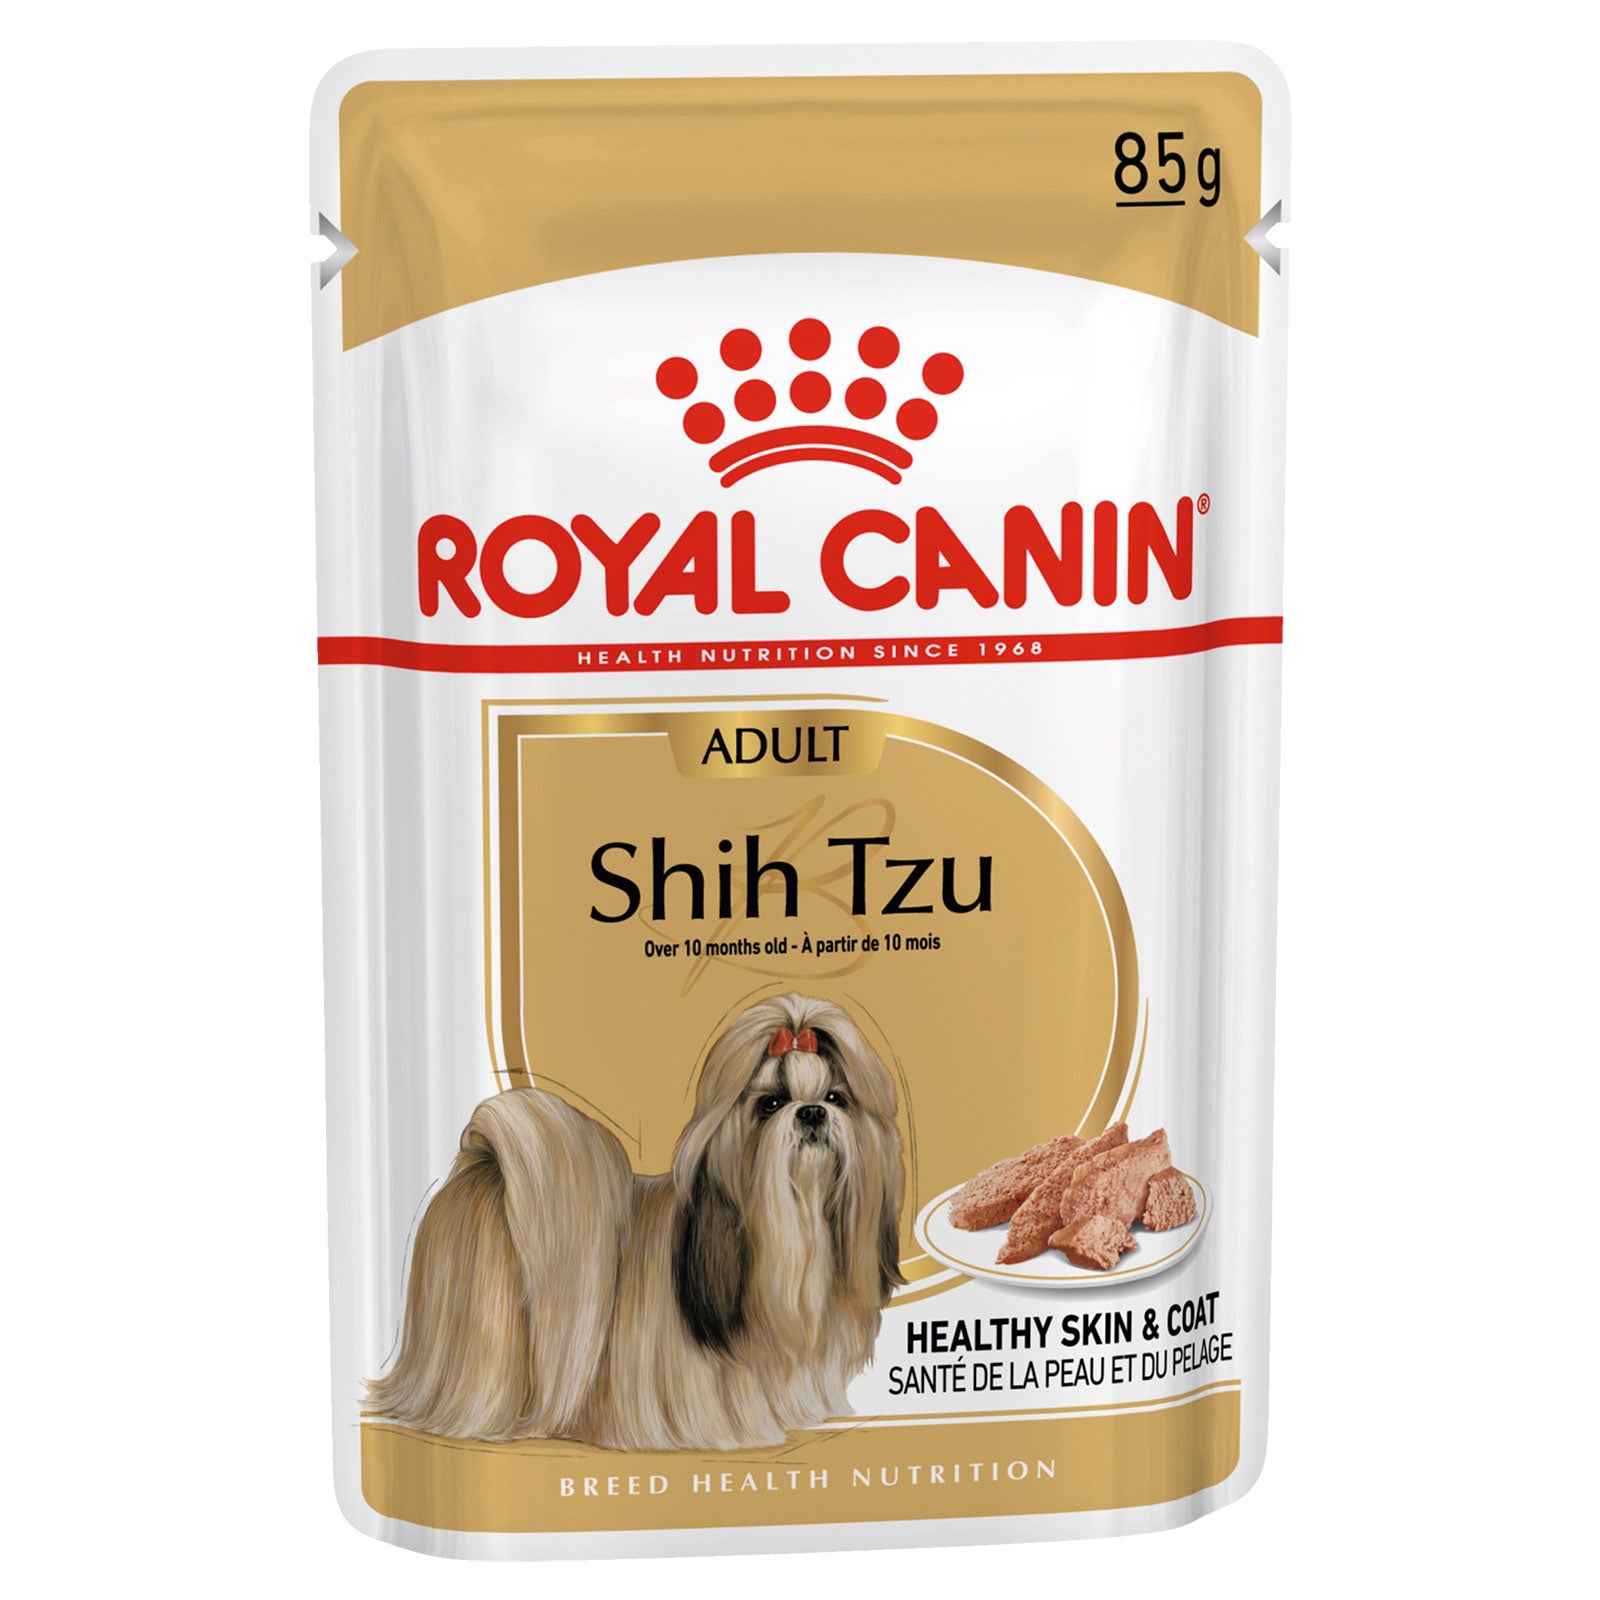 Royal Canin Dog Food Pouch Adult Shih Tzu